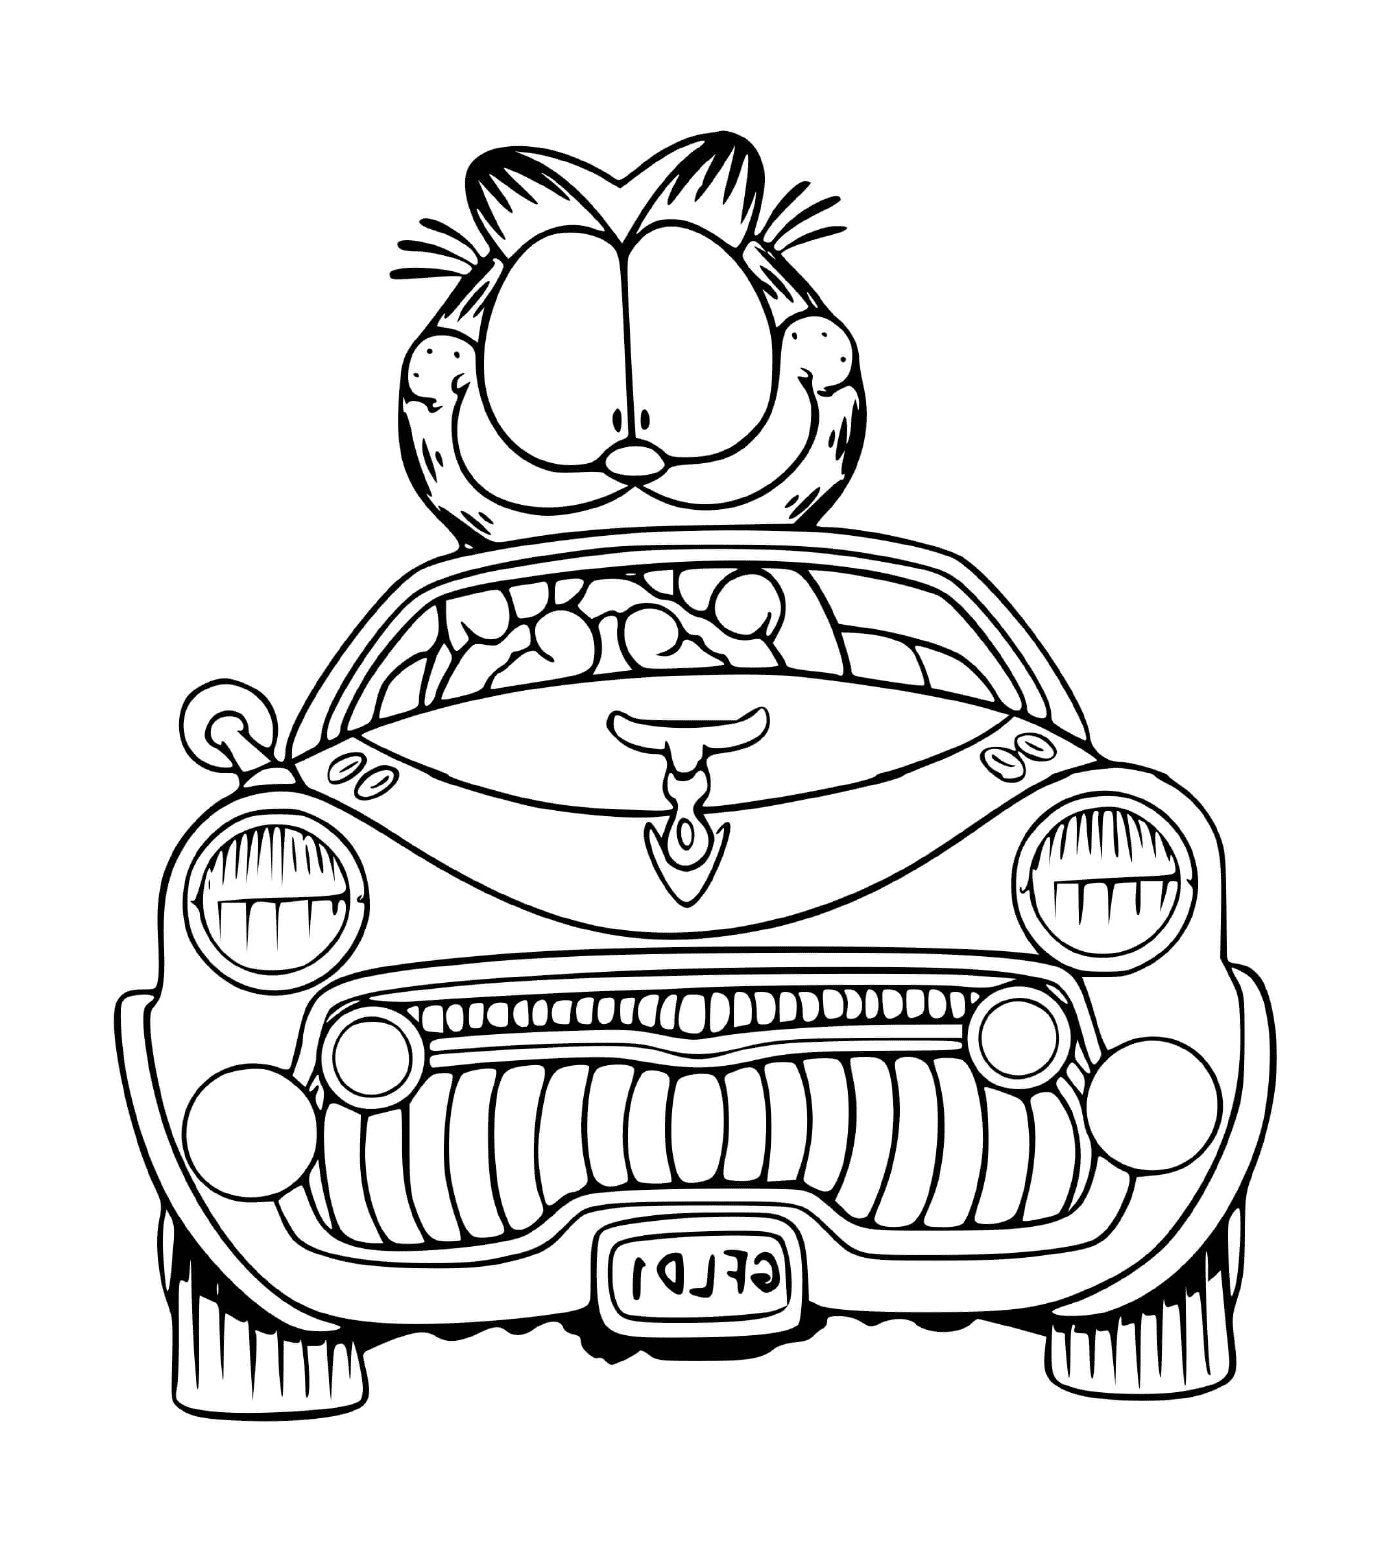  Garfield se beneficia de un coche de lujo 